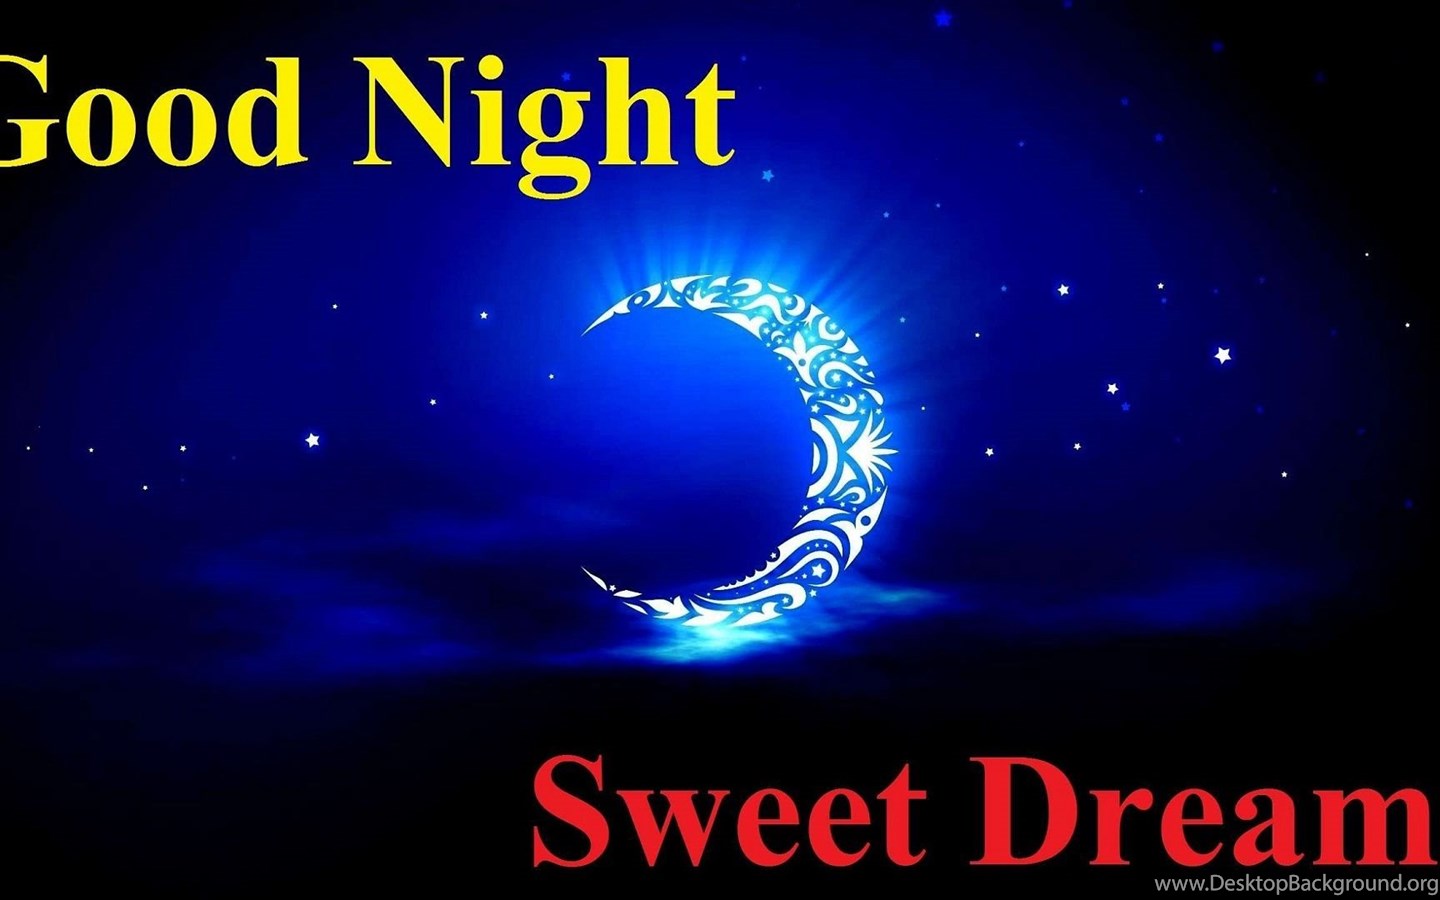 Good Night Sweet Dreams Wishes Wallpapers Desktop Background